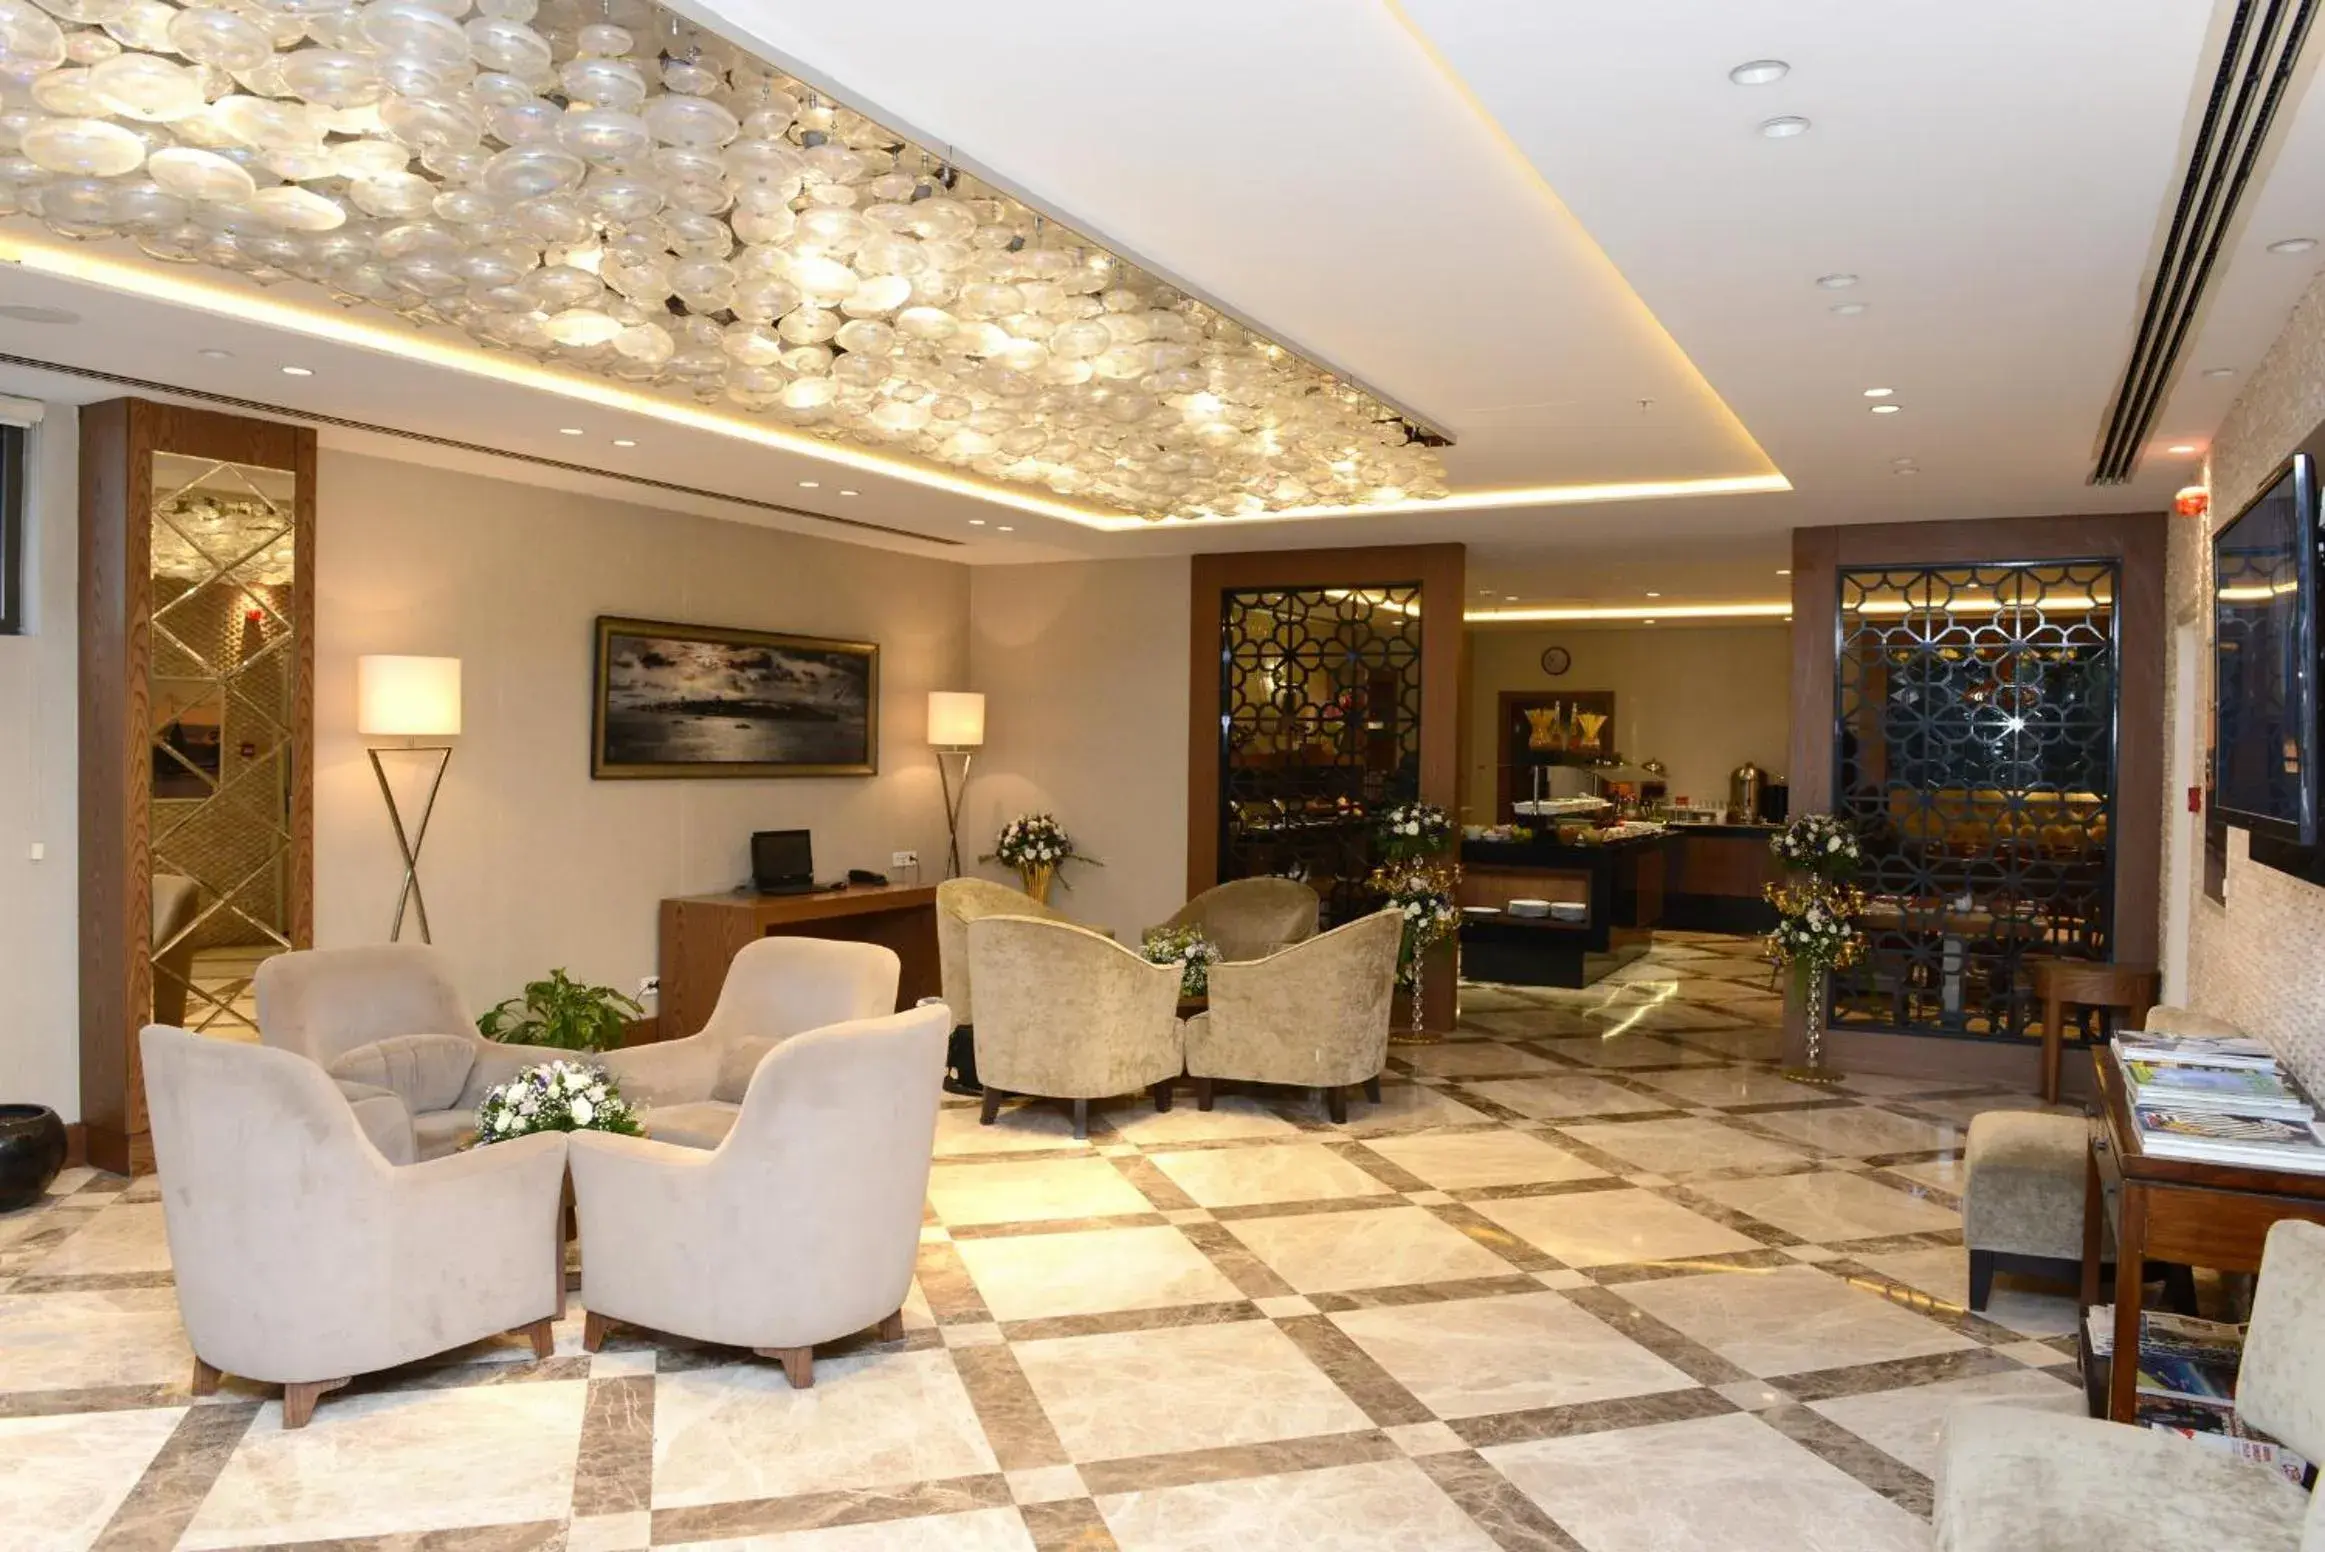 Lobby or reception, Lobby/Reception in Style Hotel Sisli